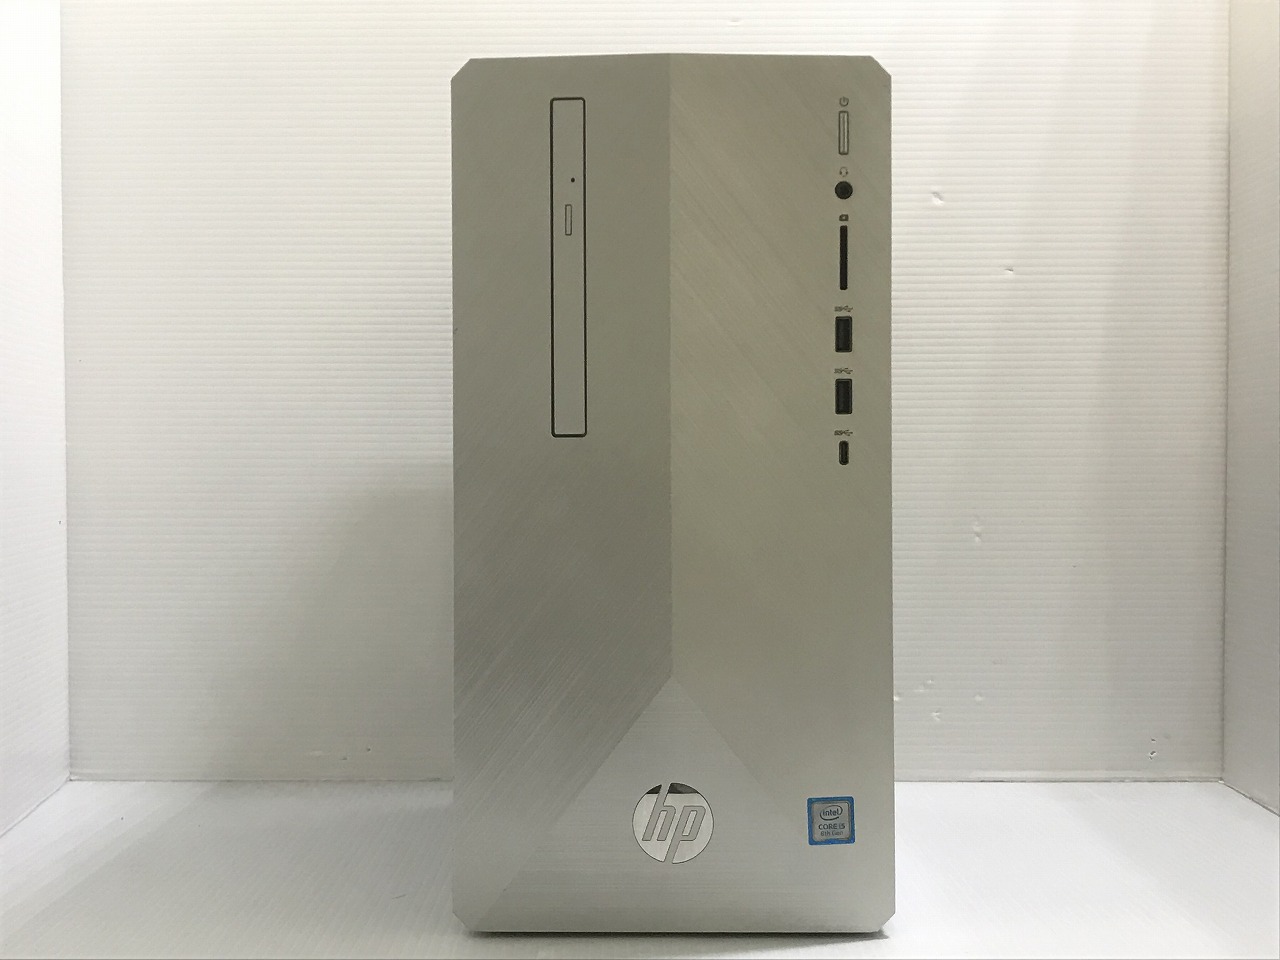 Schaap Origineel escaleren 日本HP Pavilion Desktop 595 CPU：Core i5 8400 2.8GHz / メモリ：8GB / SSD：256GB /  ドライブ：DVD-RW / OS：Windows 11 Home 64bit 中古デスクトップパソコンが激安販売中！ 中古パソコン市場